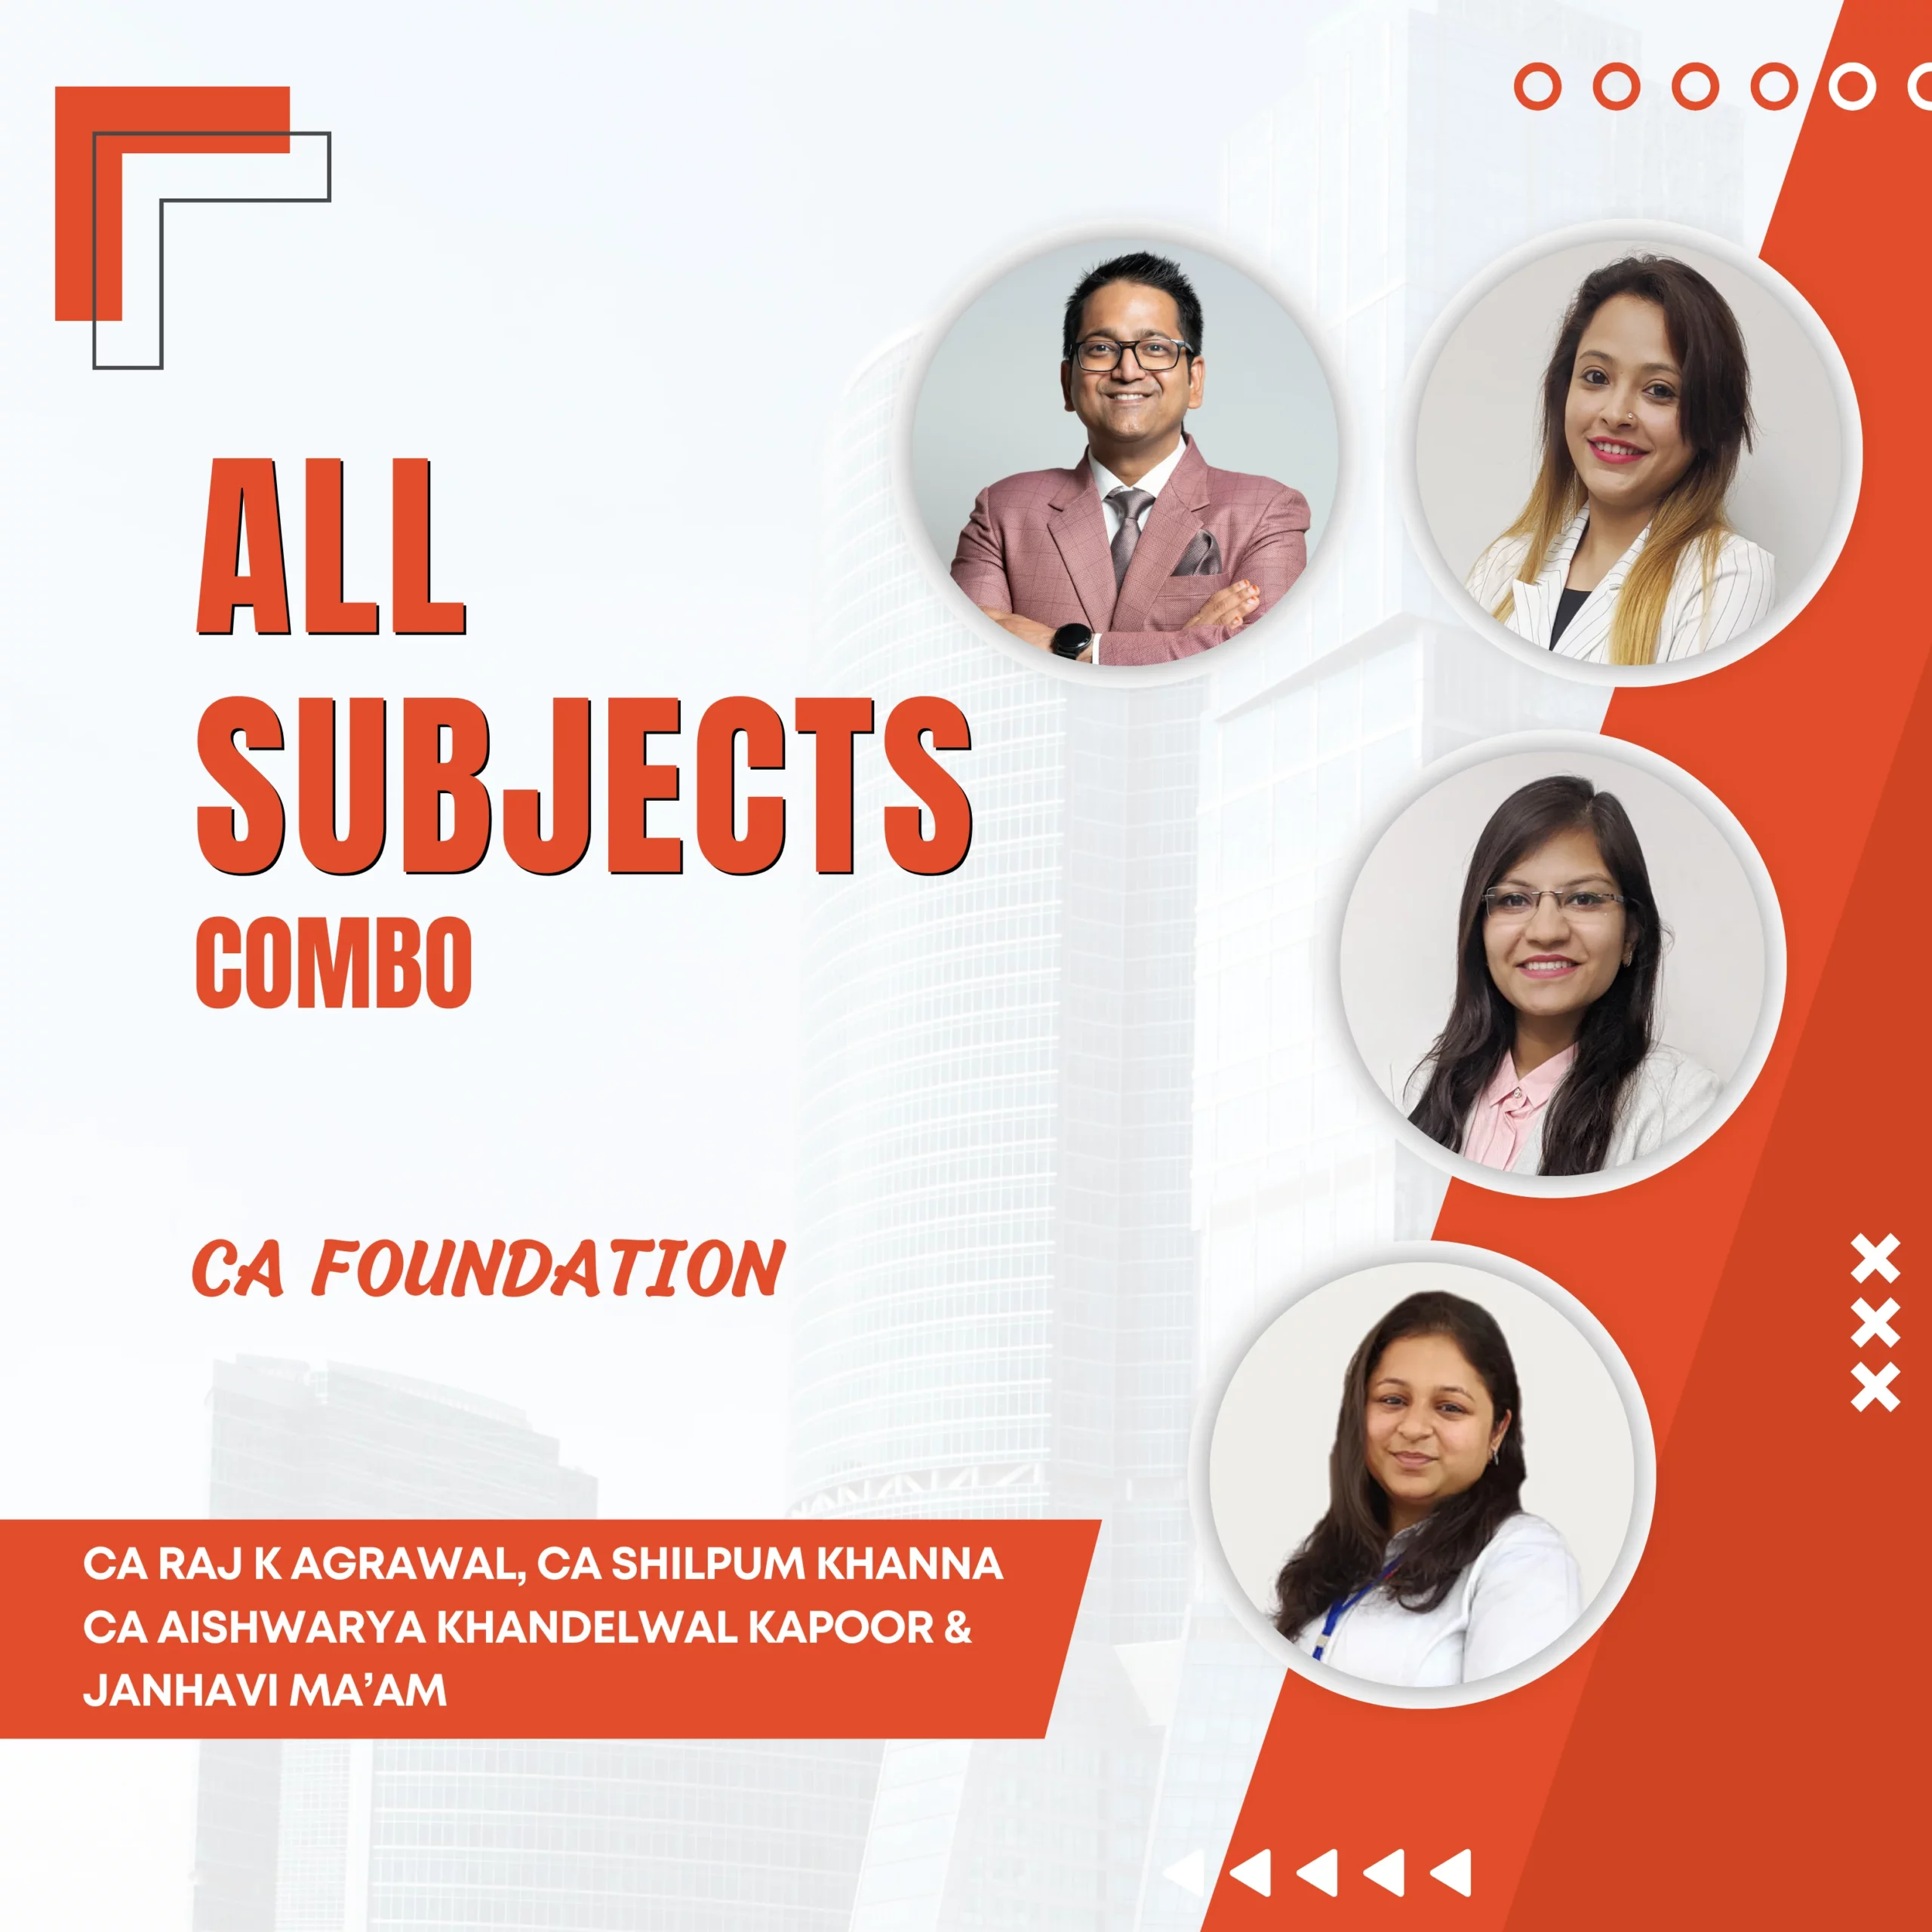 ca-foundation-all-subjects-combo